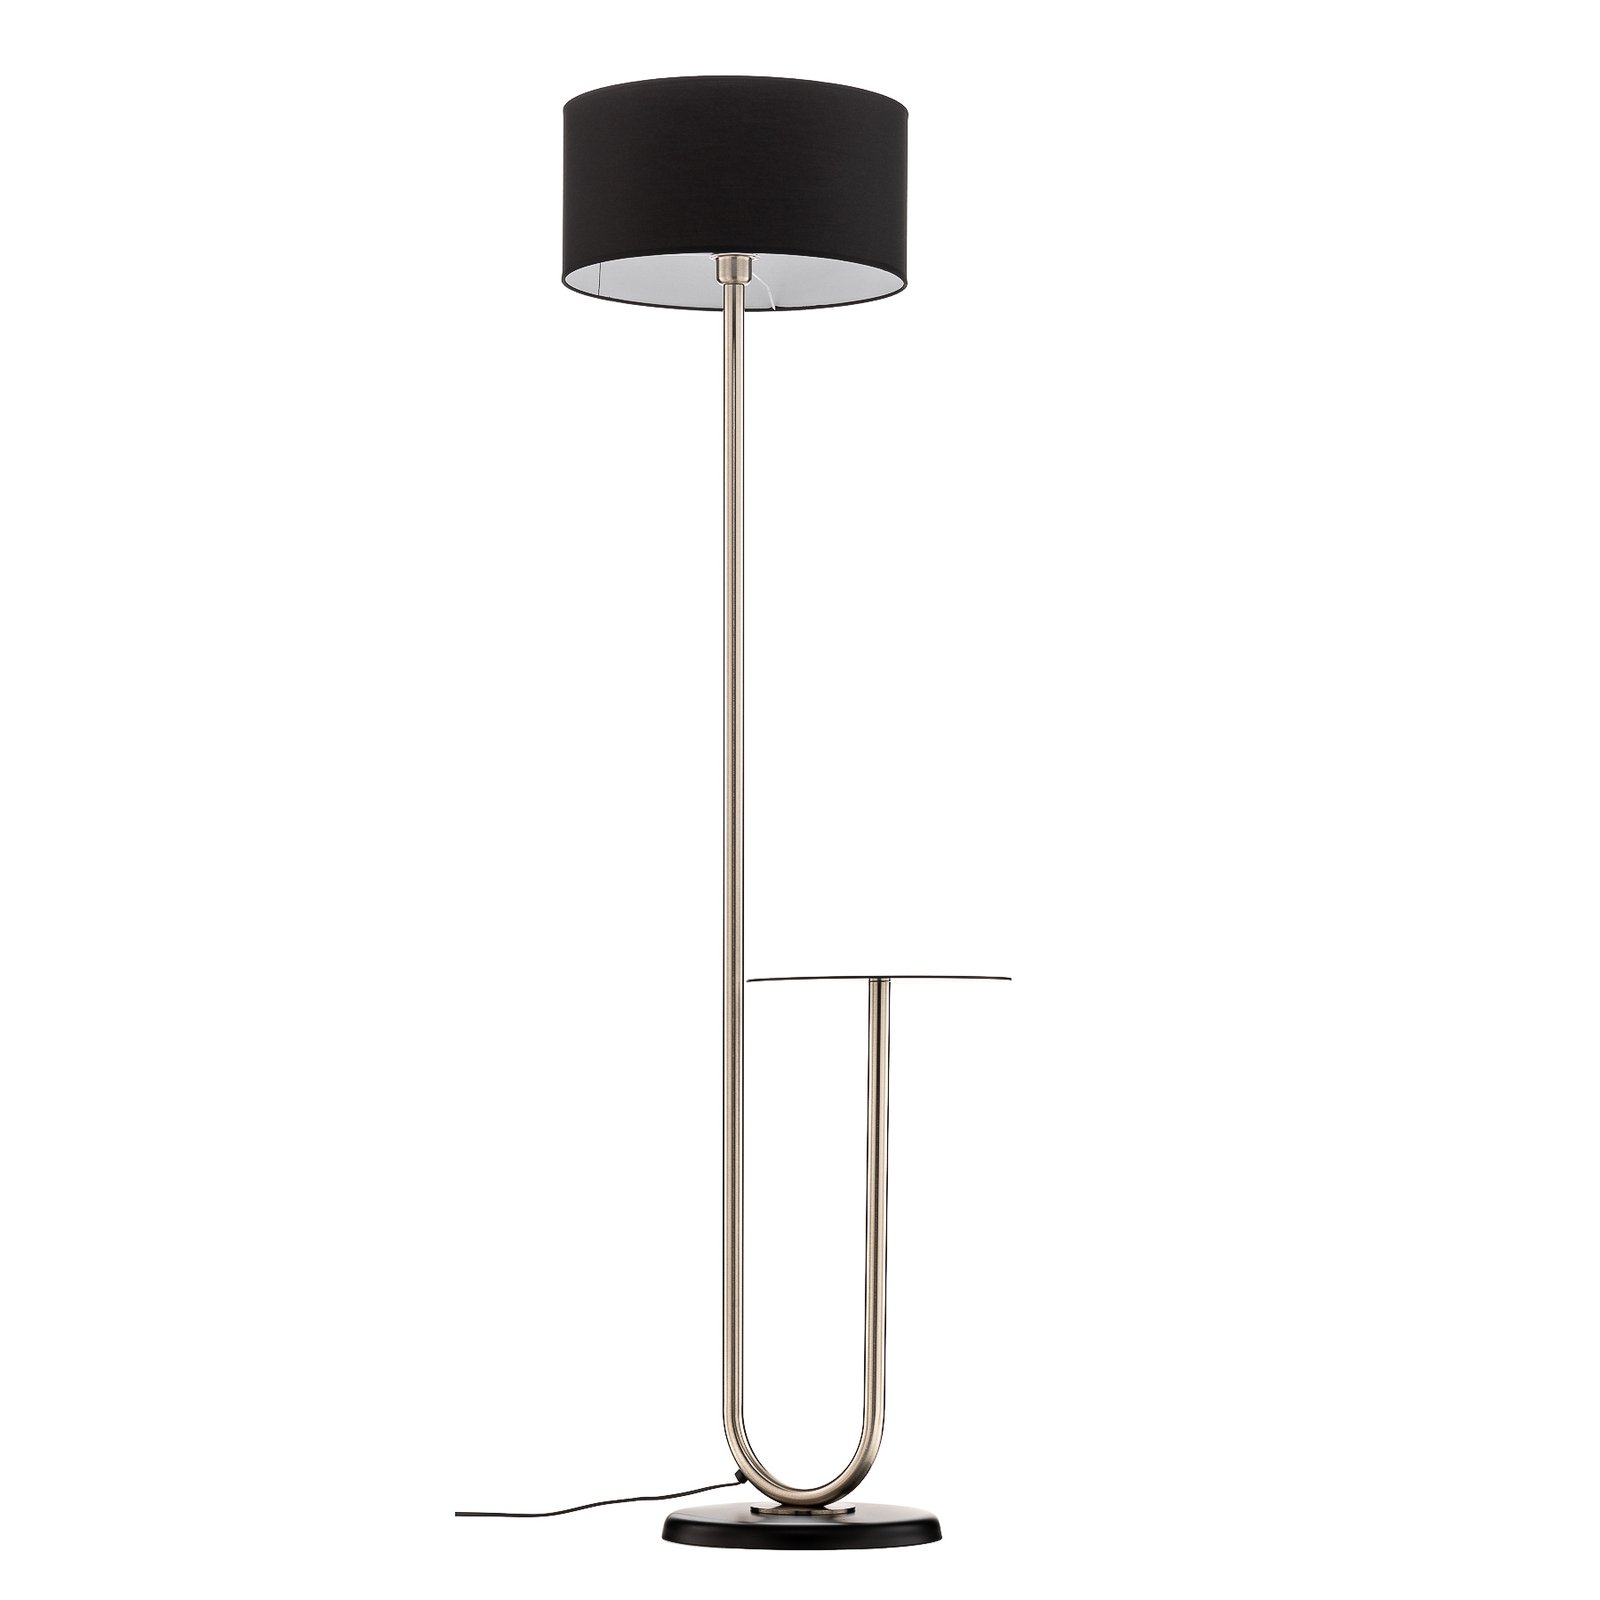 Pongo floor lamp, fabric lampshade and shelf